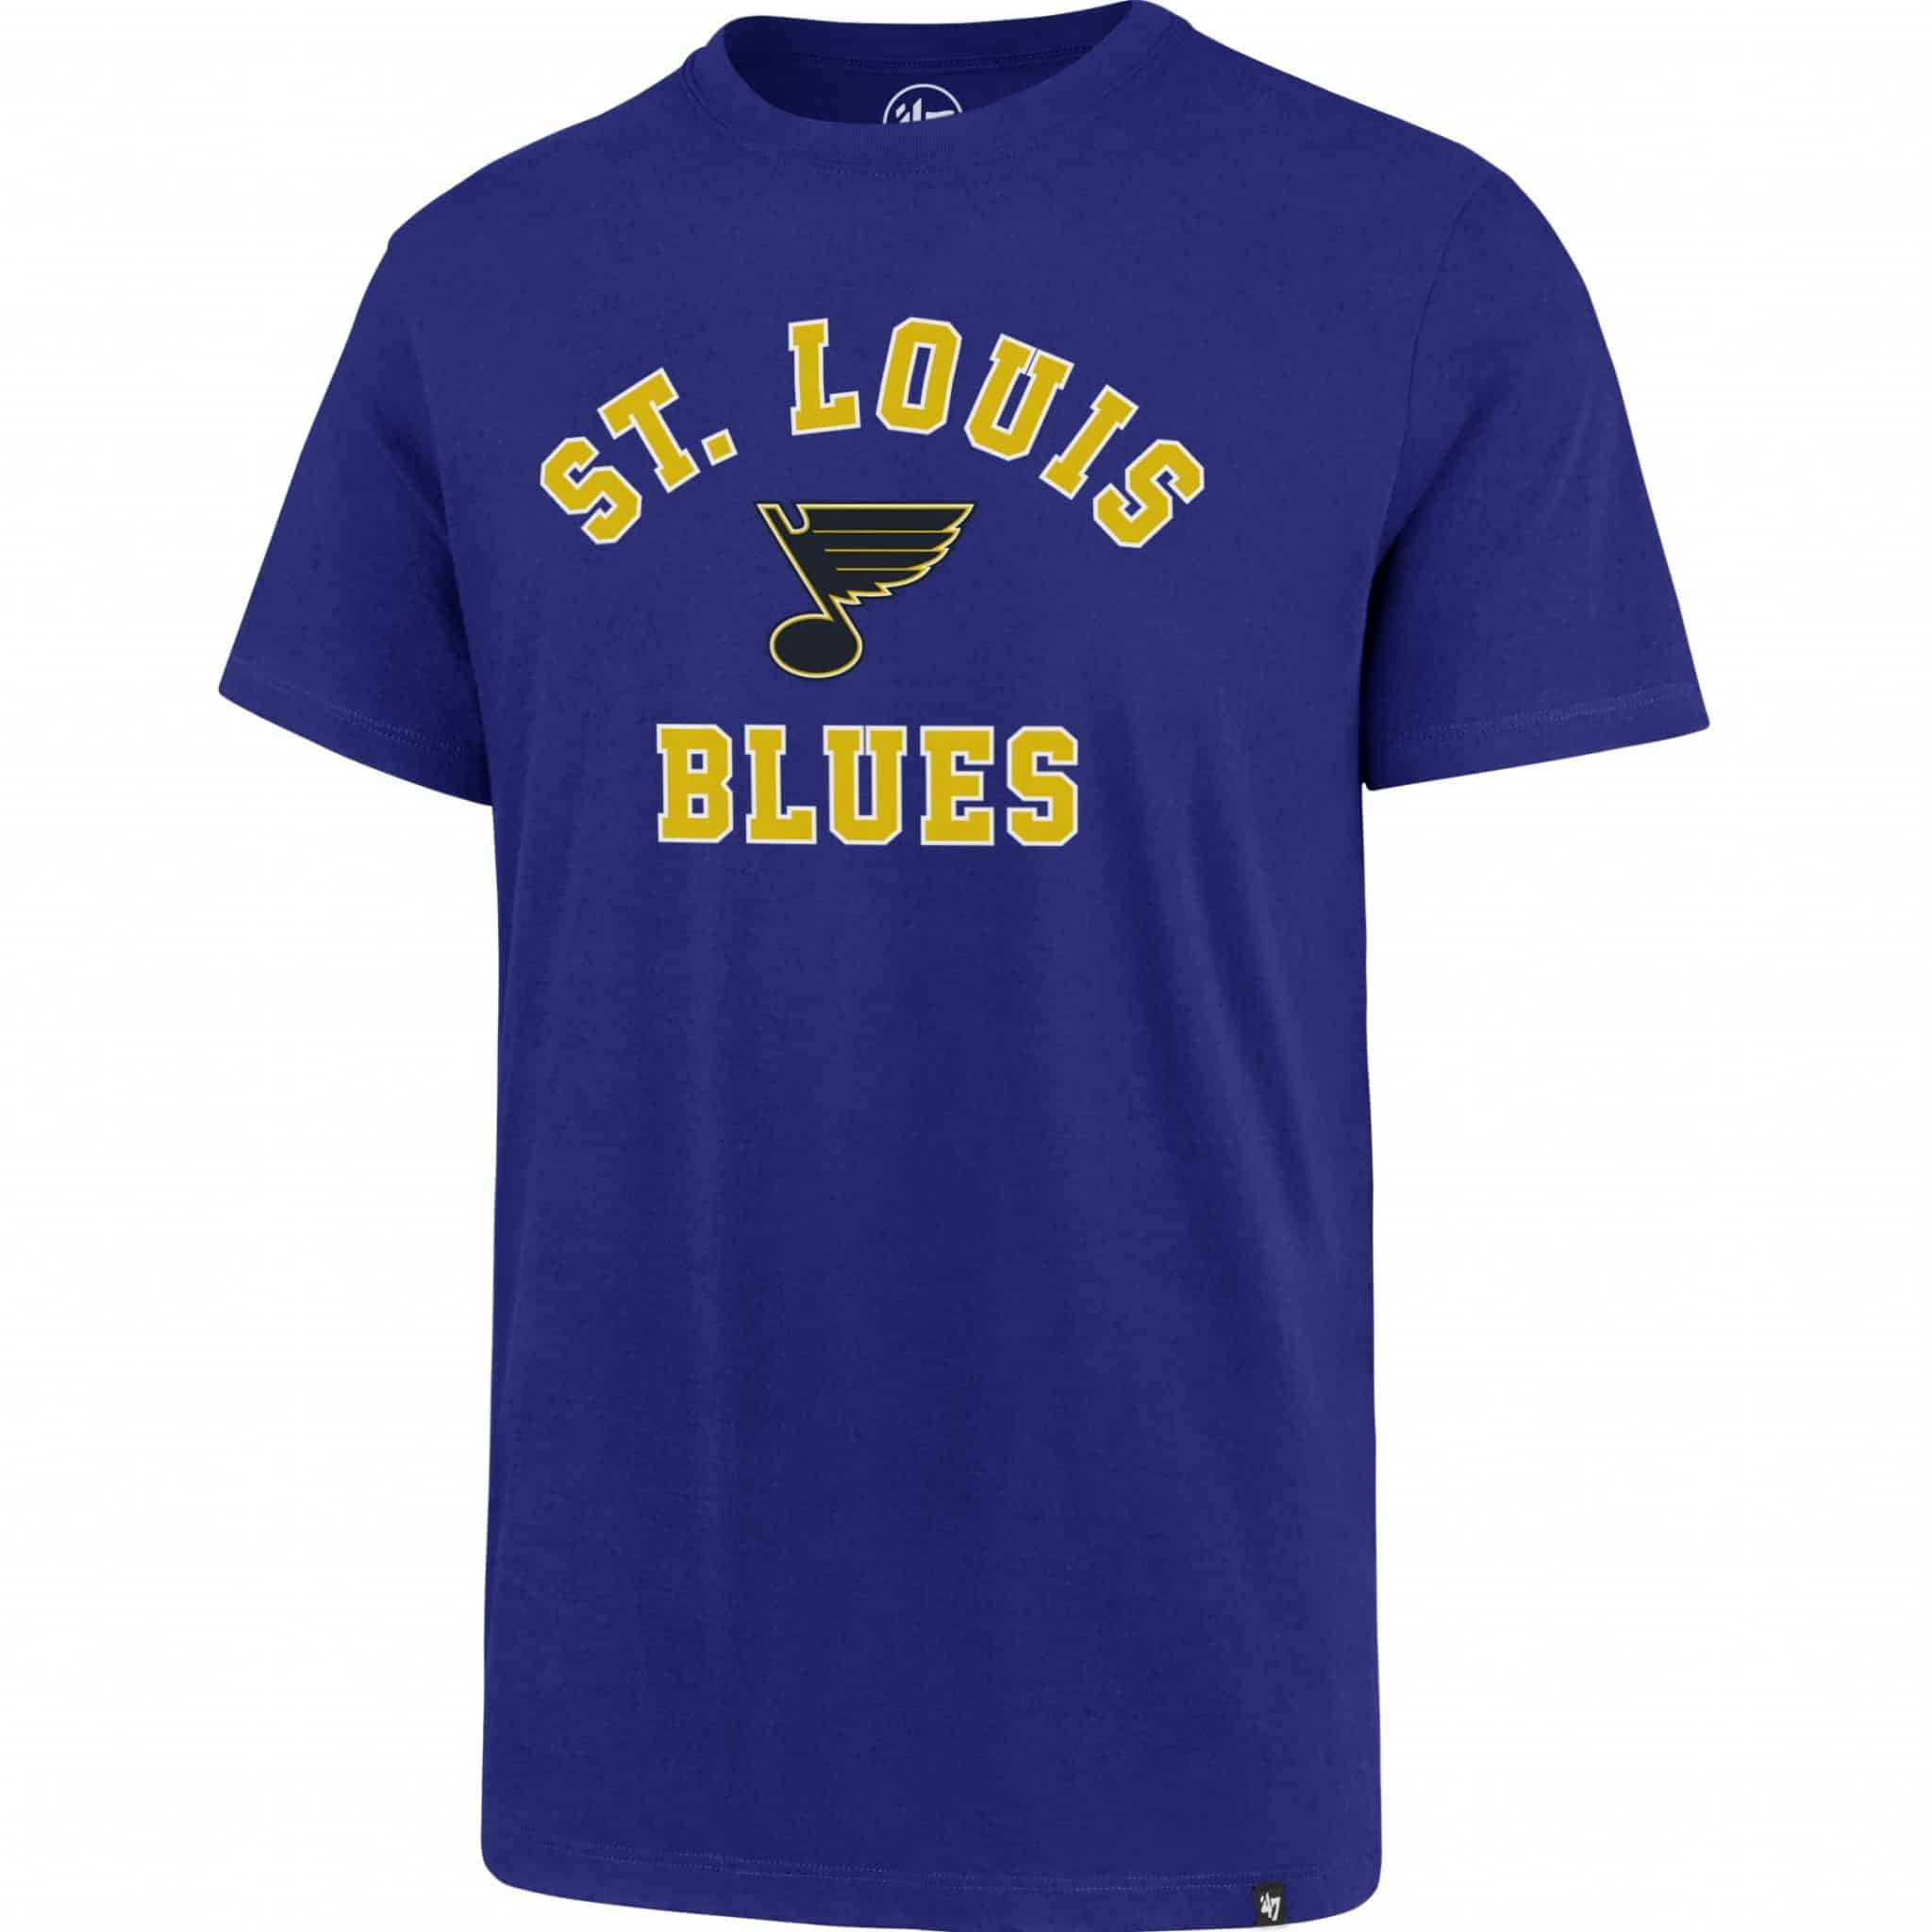 St. Louis Blues Men's 47 Brand Blue Rival T-Shirt Tee - Small